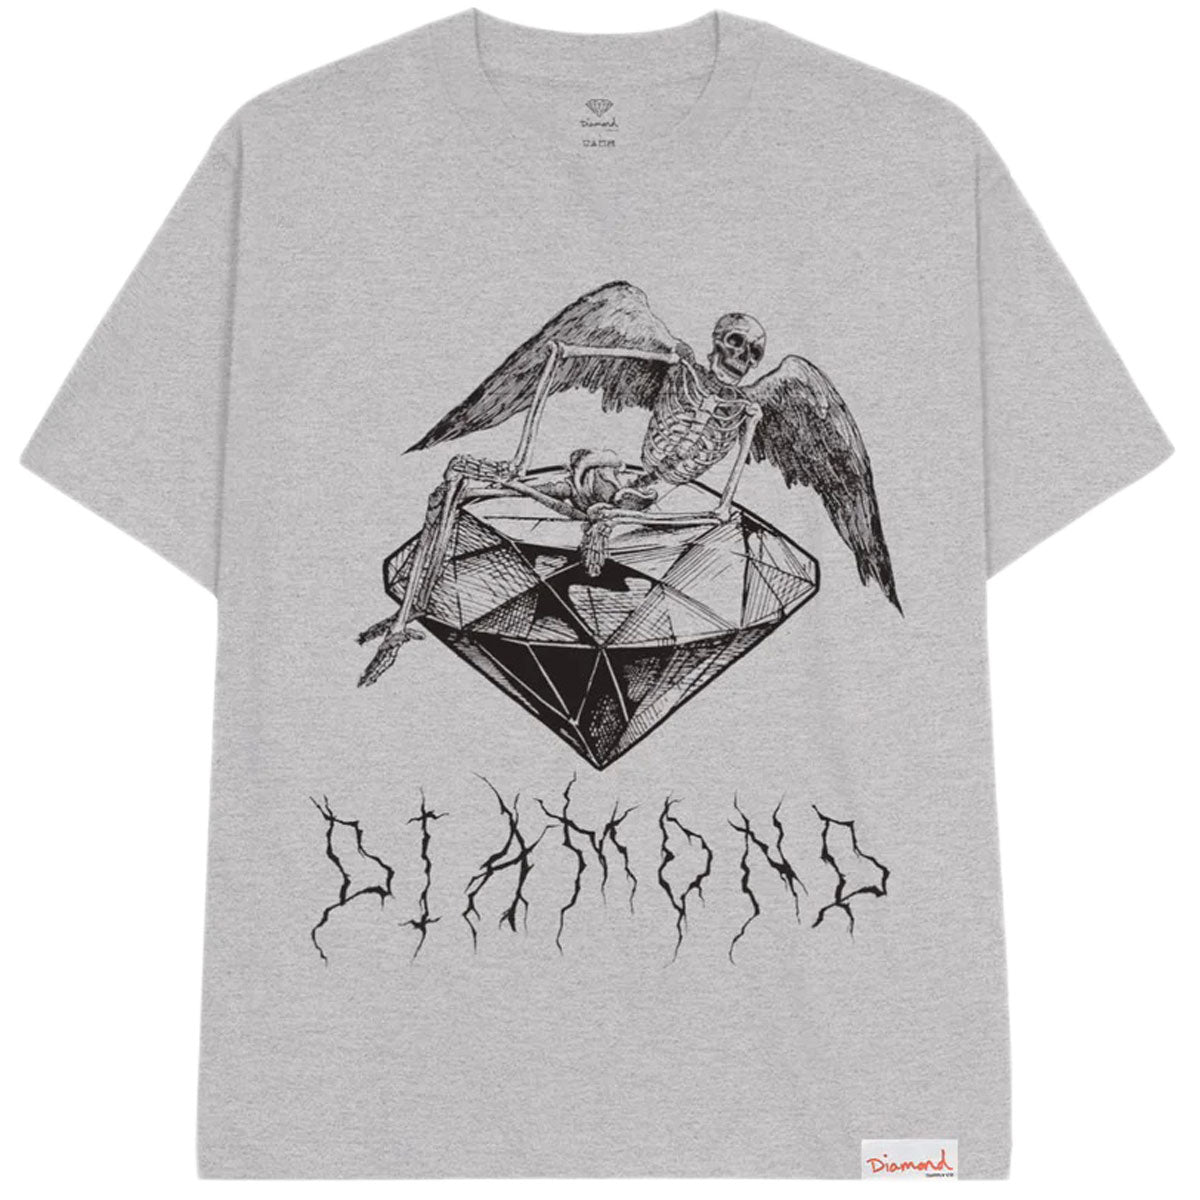 Diamond Supply Co. Skulls And Diamonds T-Shirt - Heather Grey image 1